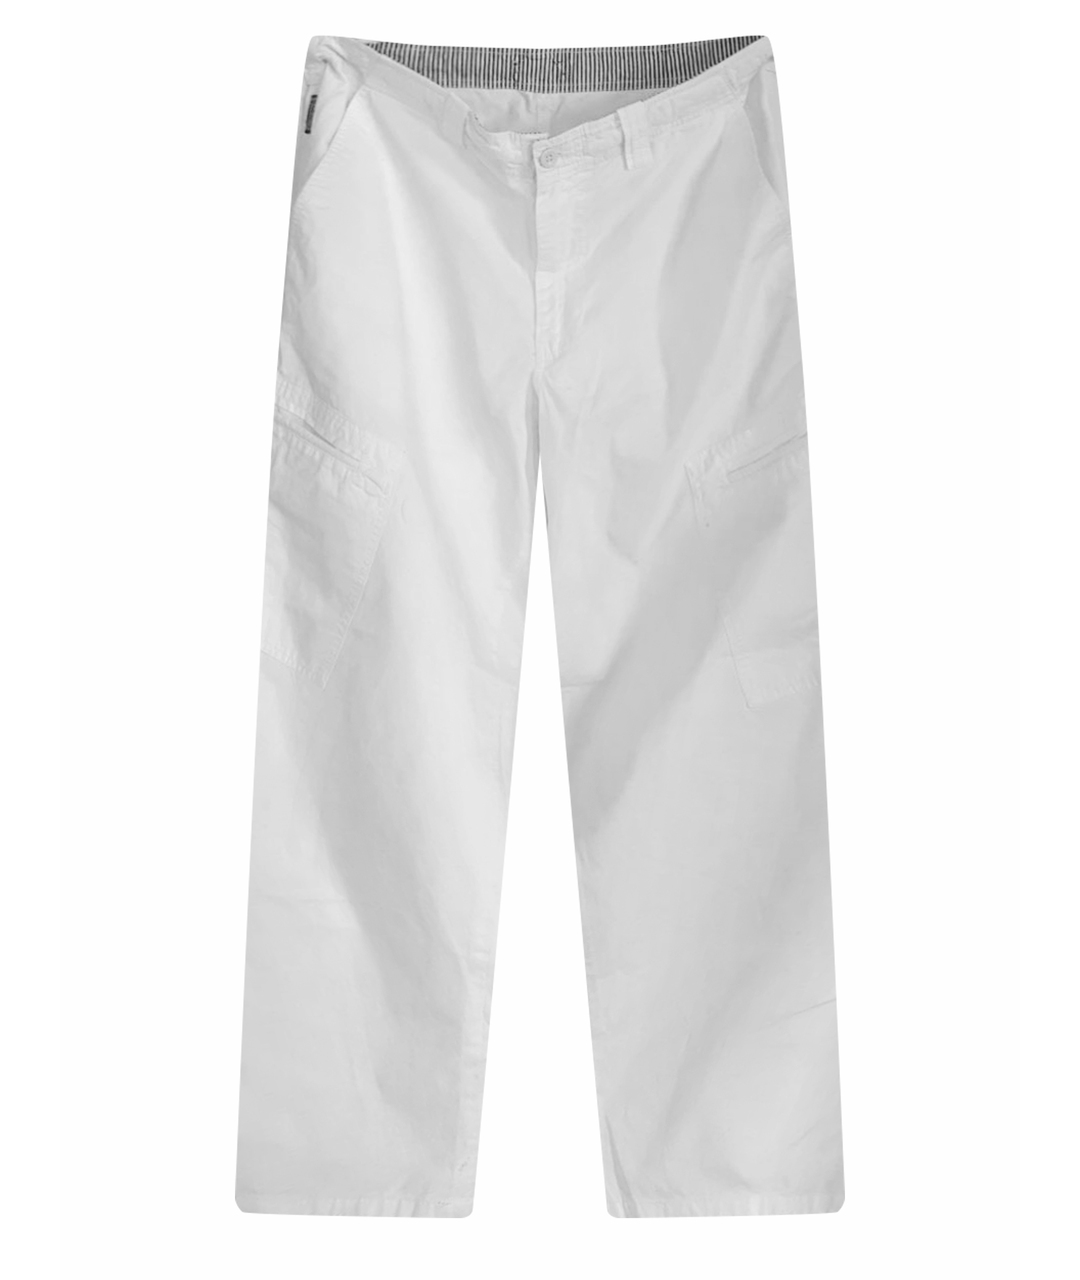 ARMANI JEANS Белые хлопковые брюки чинос, фото 1